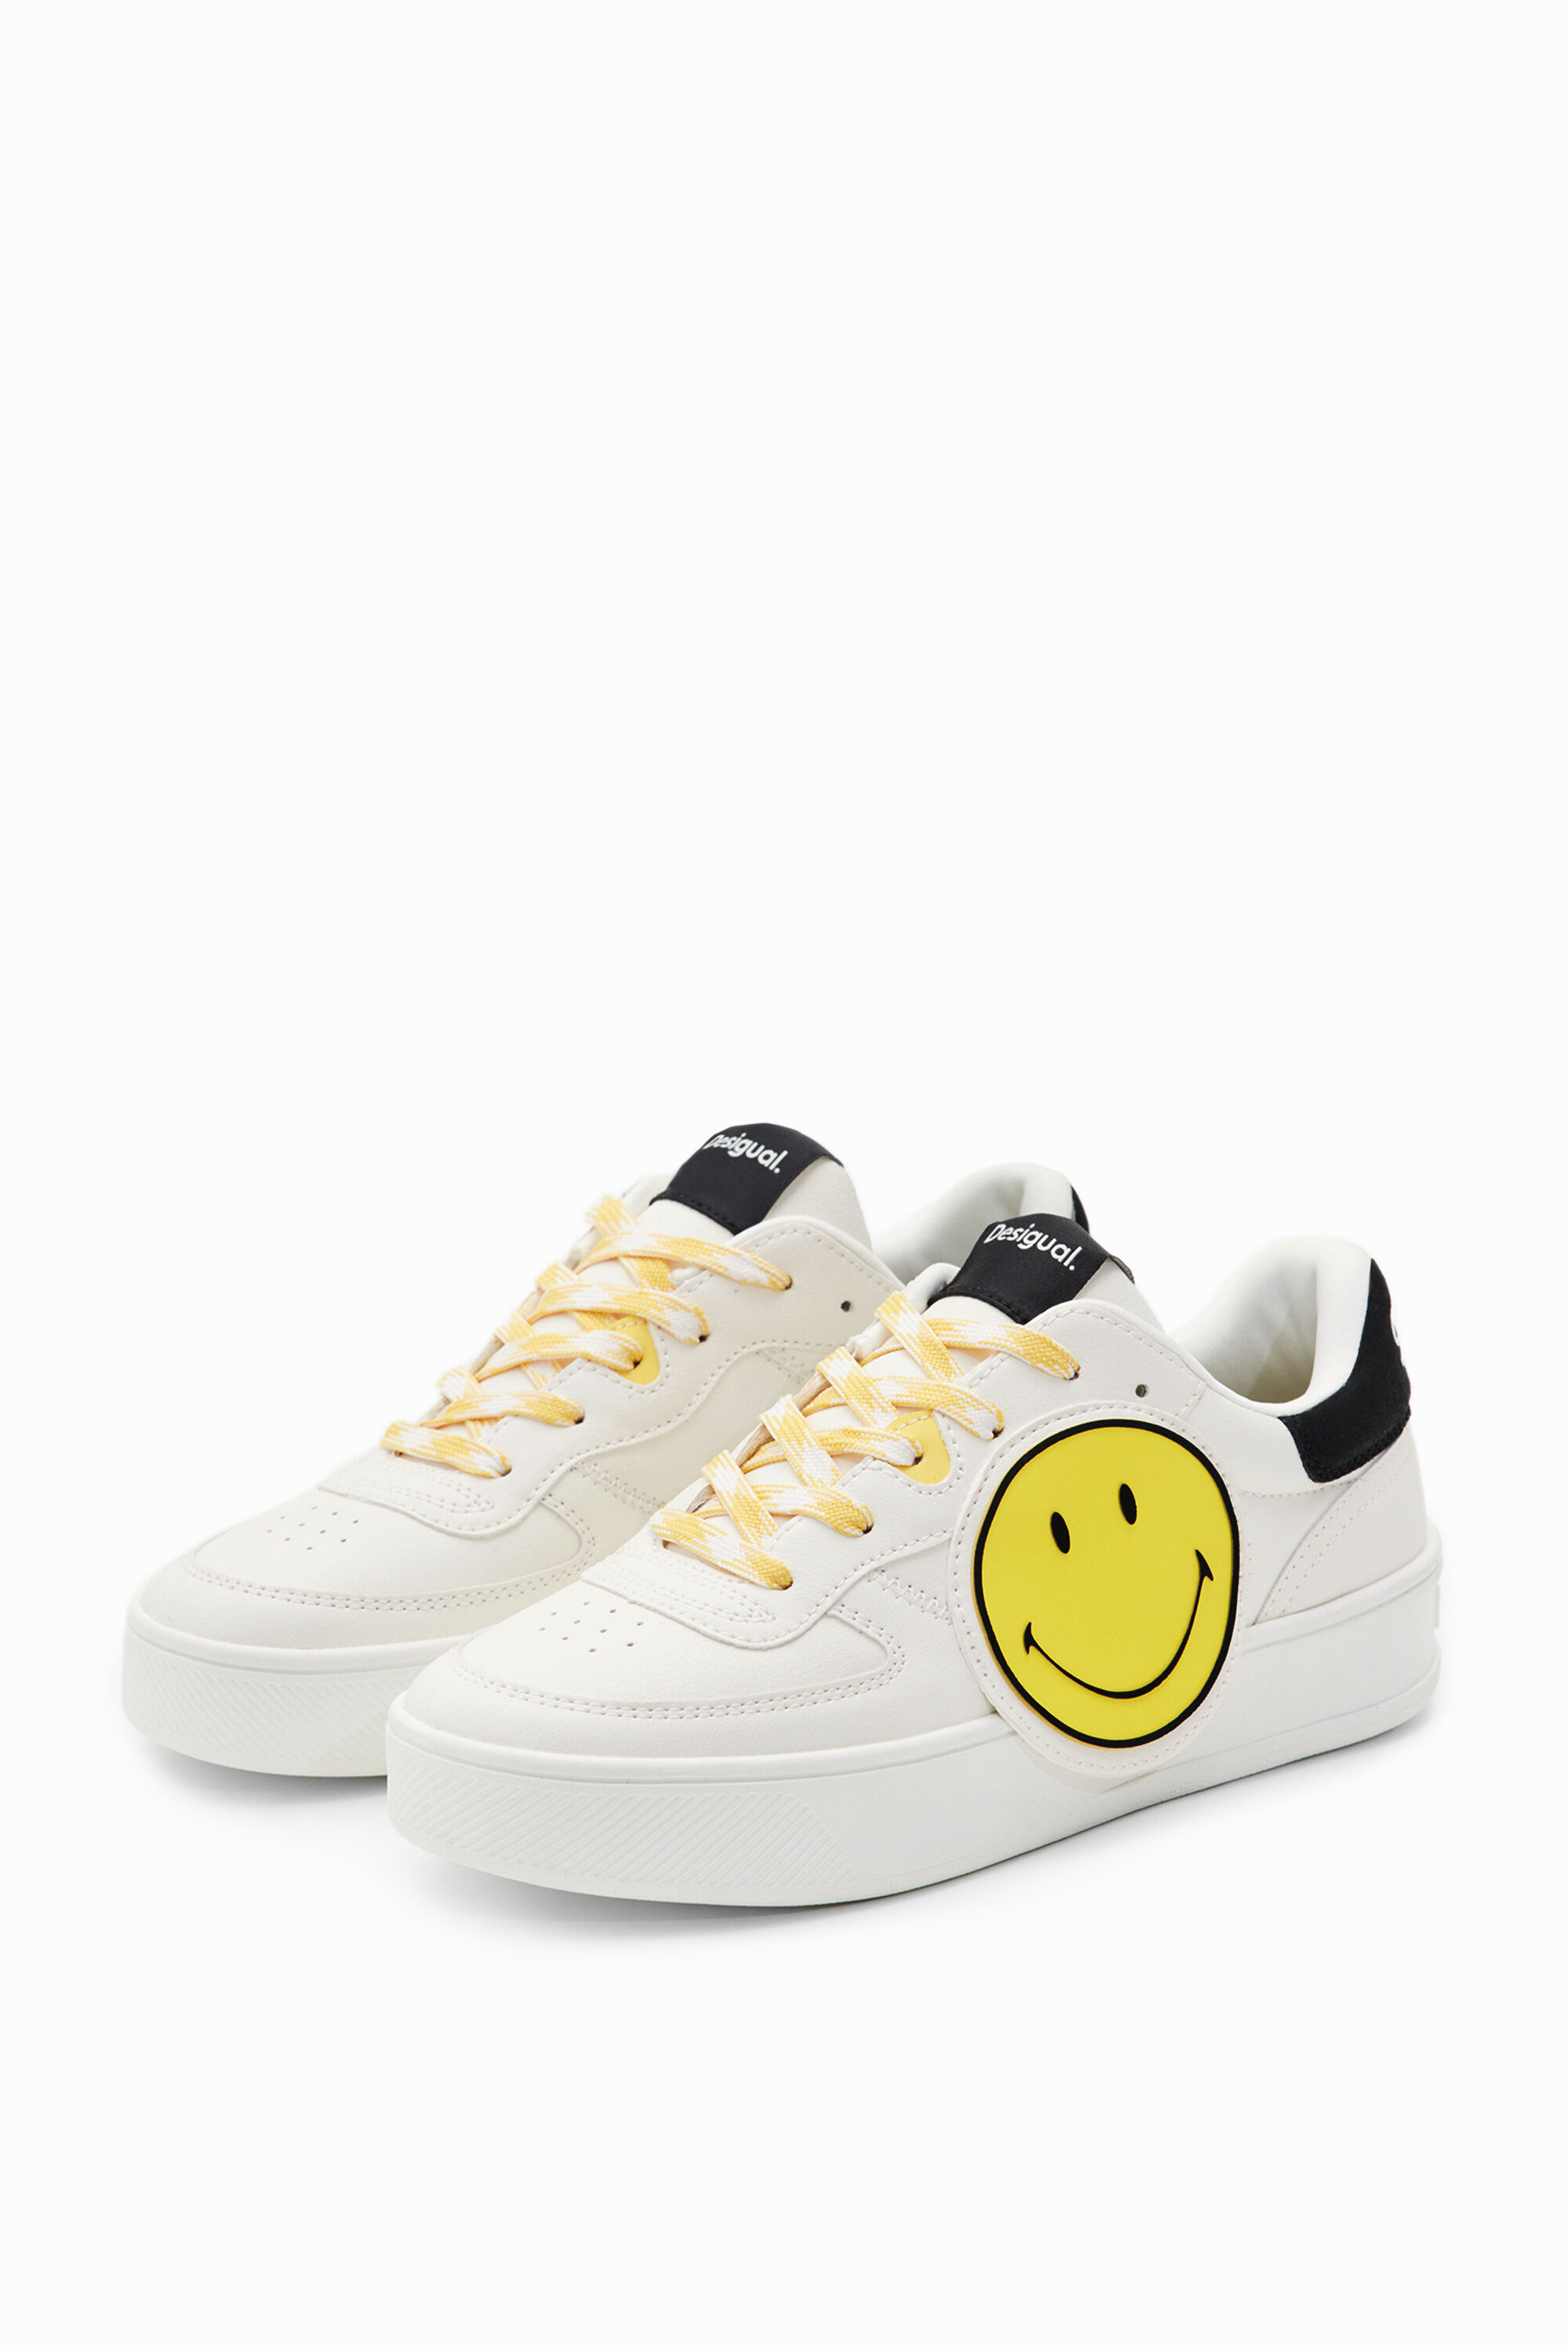 Desigual Smiley® platform sneakers